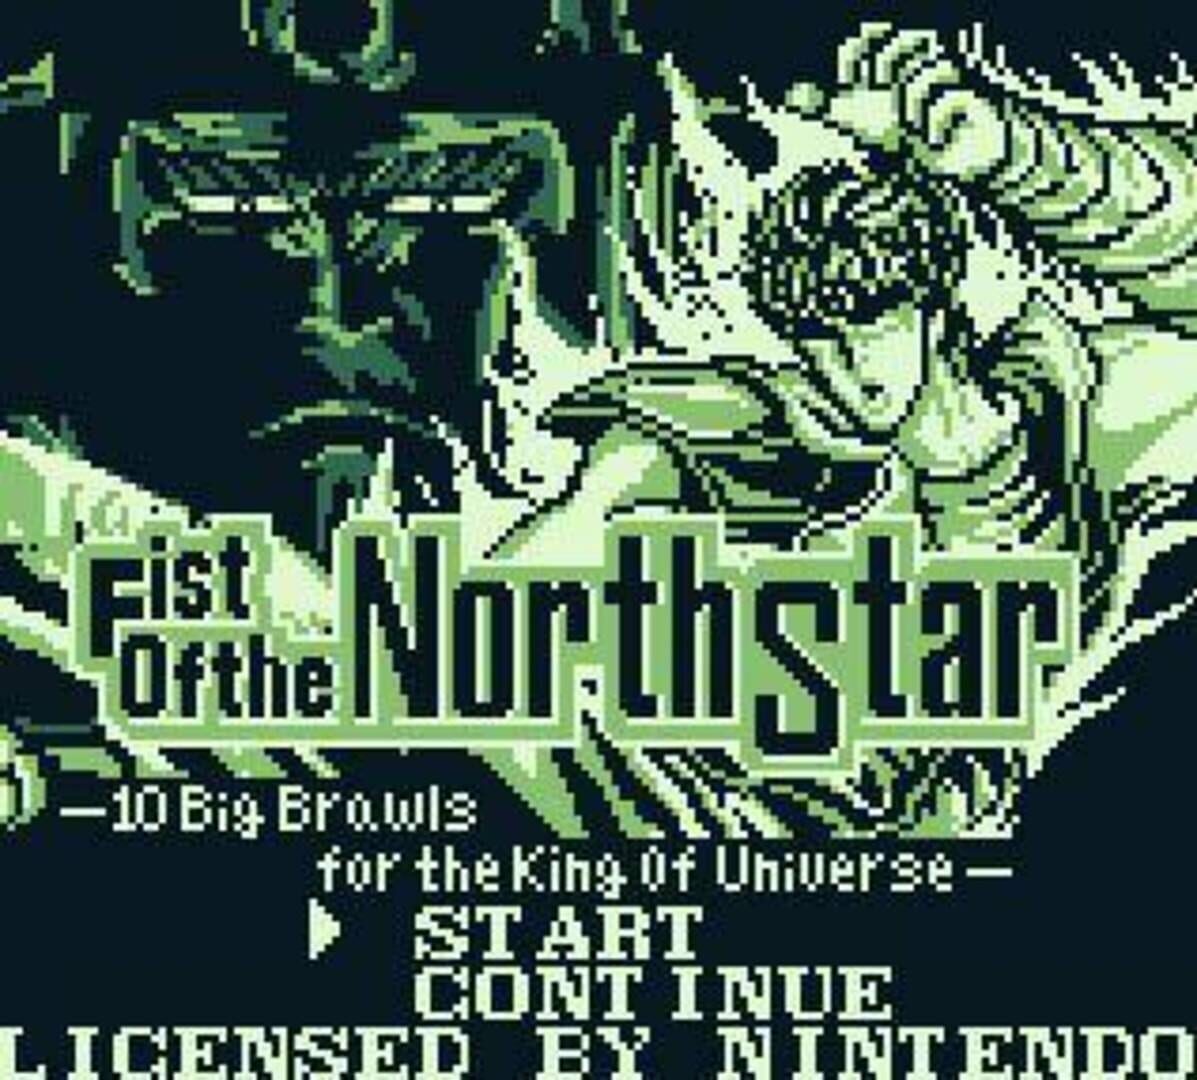 Captura de pantalla - Fist of the North Star: 10 Big Brawls for the King of Universe